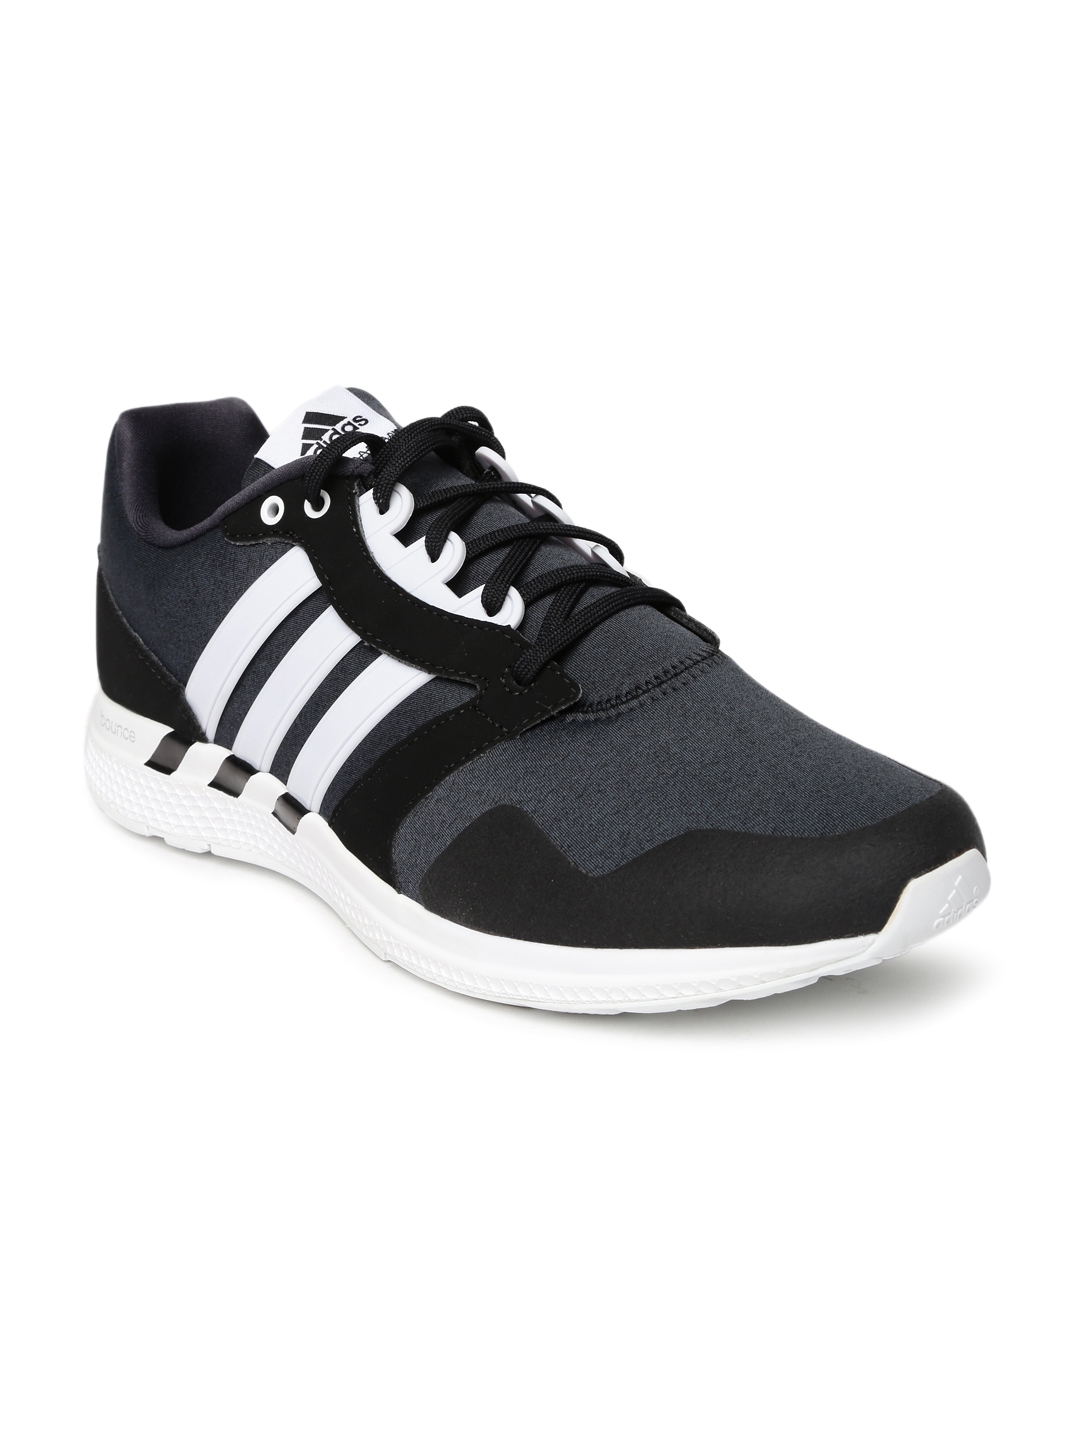 Buy ADIDAS Men Grey & Black Equipment 16 Running Shoes - Sports Shoes ...